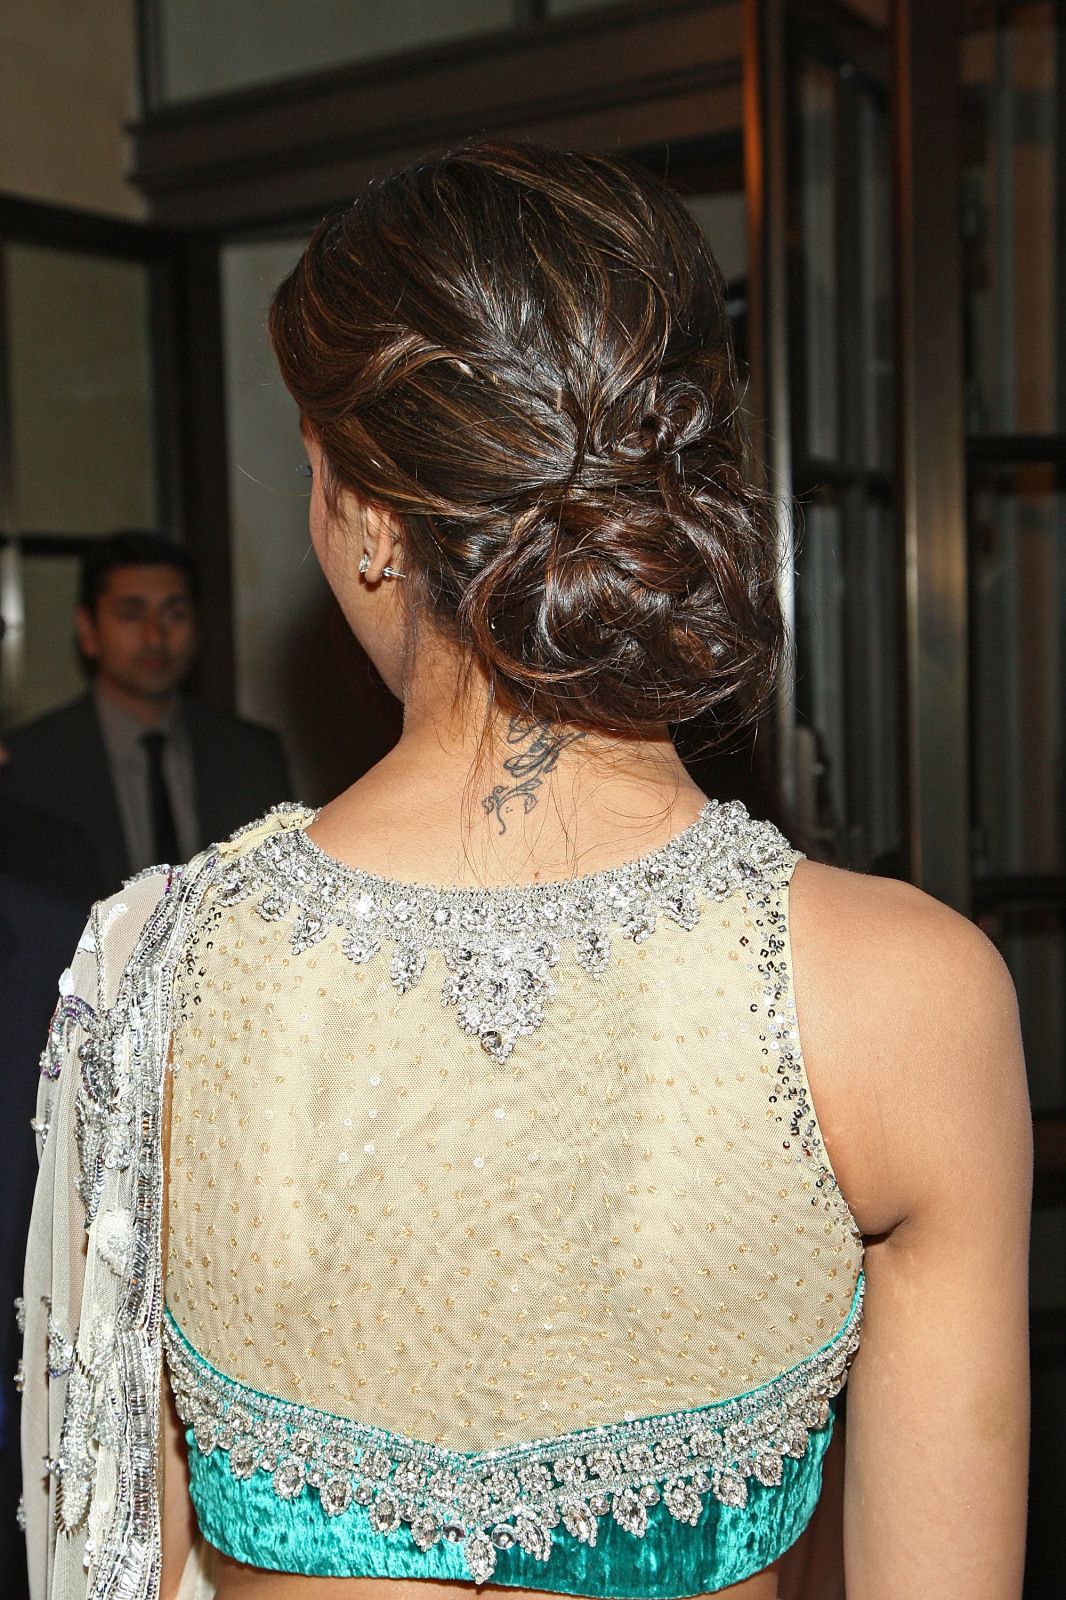 Shivaay actress Erika Kaar knows more about Deepika Padukone's Ranbir  Kapoor tattoo than you do - watch video! - Bollywood News & Gossip, Movie  Reviews, Trailers & Videos at Bollywoodlife.com